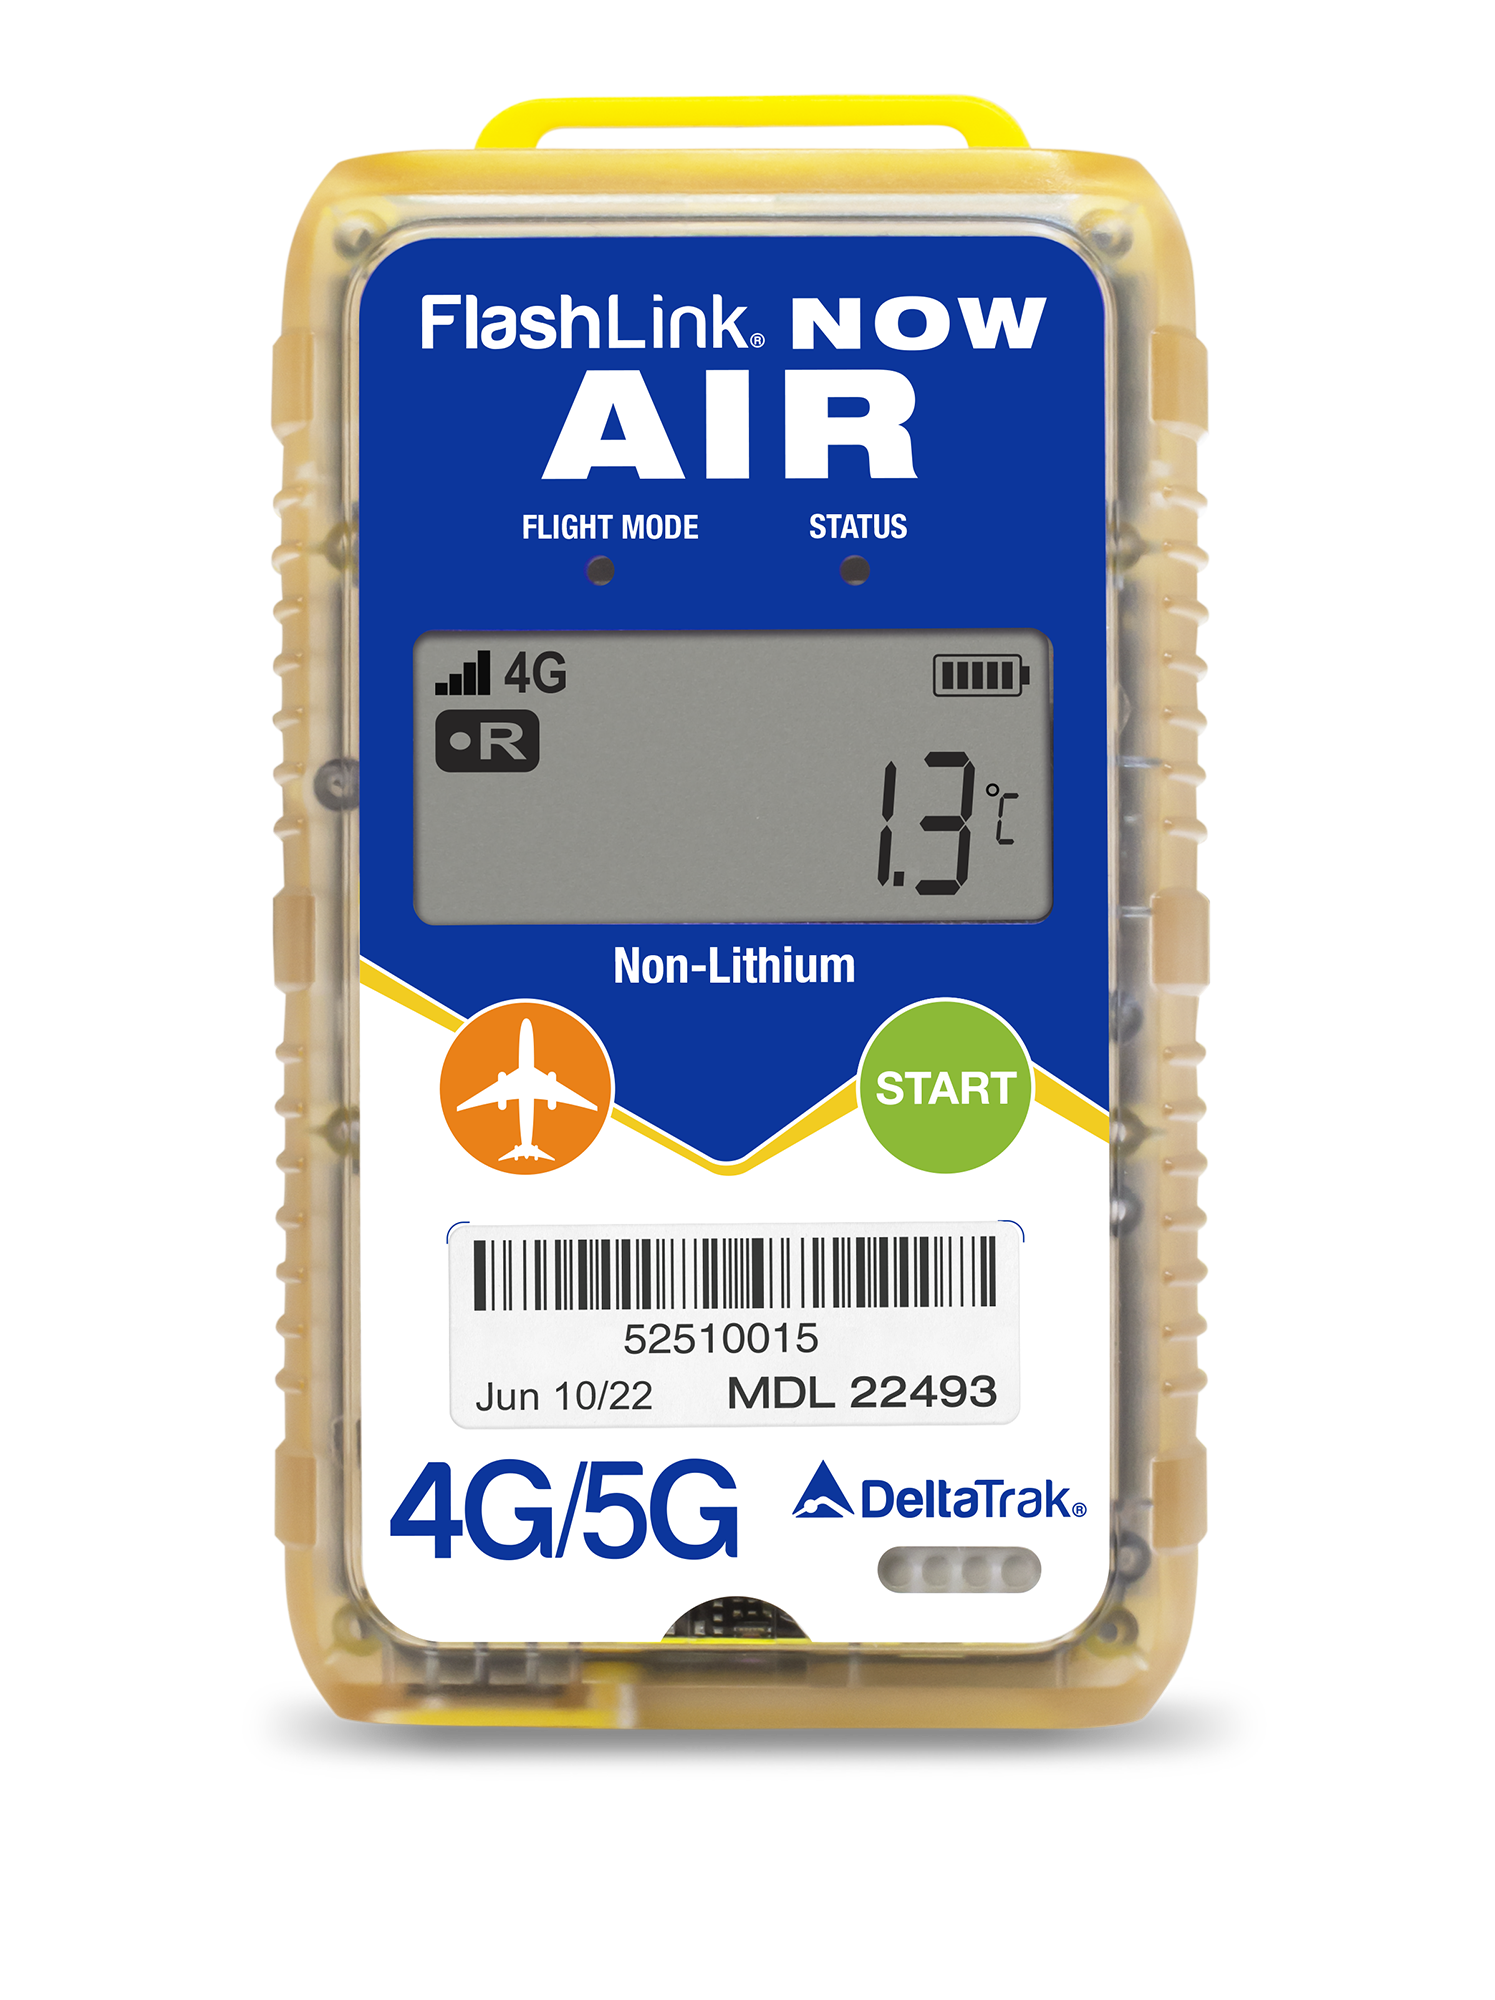 FlashLink® NOW AIR 4G/5G Real-Time In-Transit Logger, Model 22493